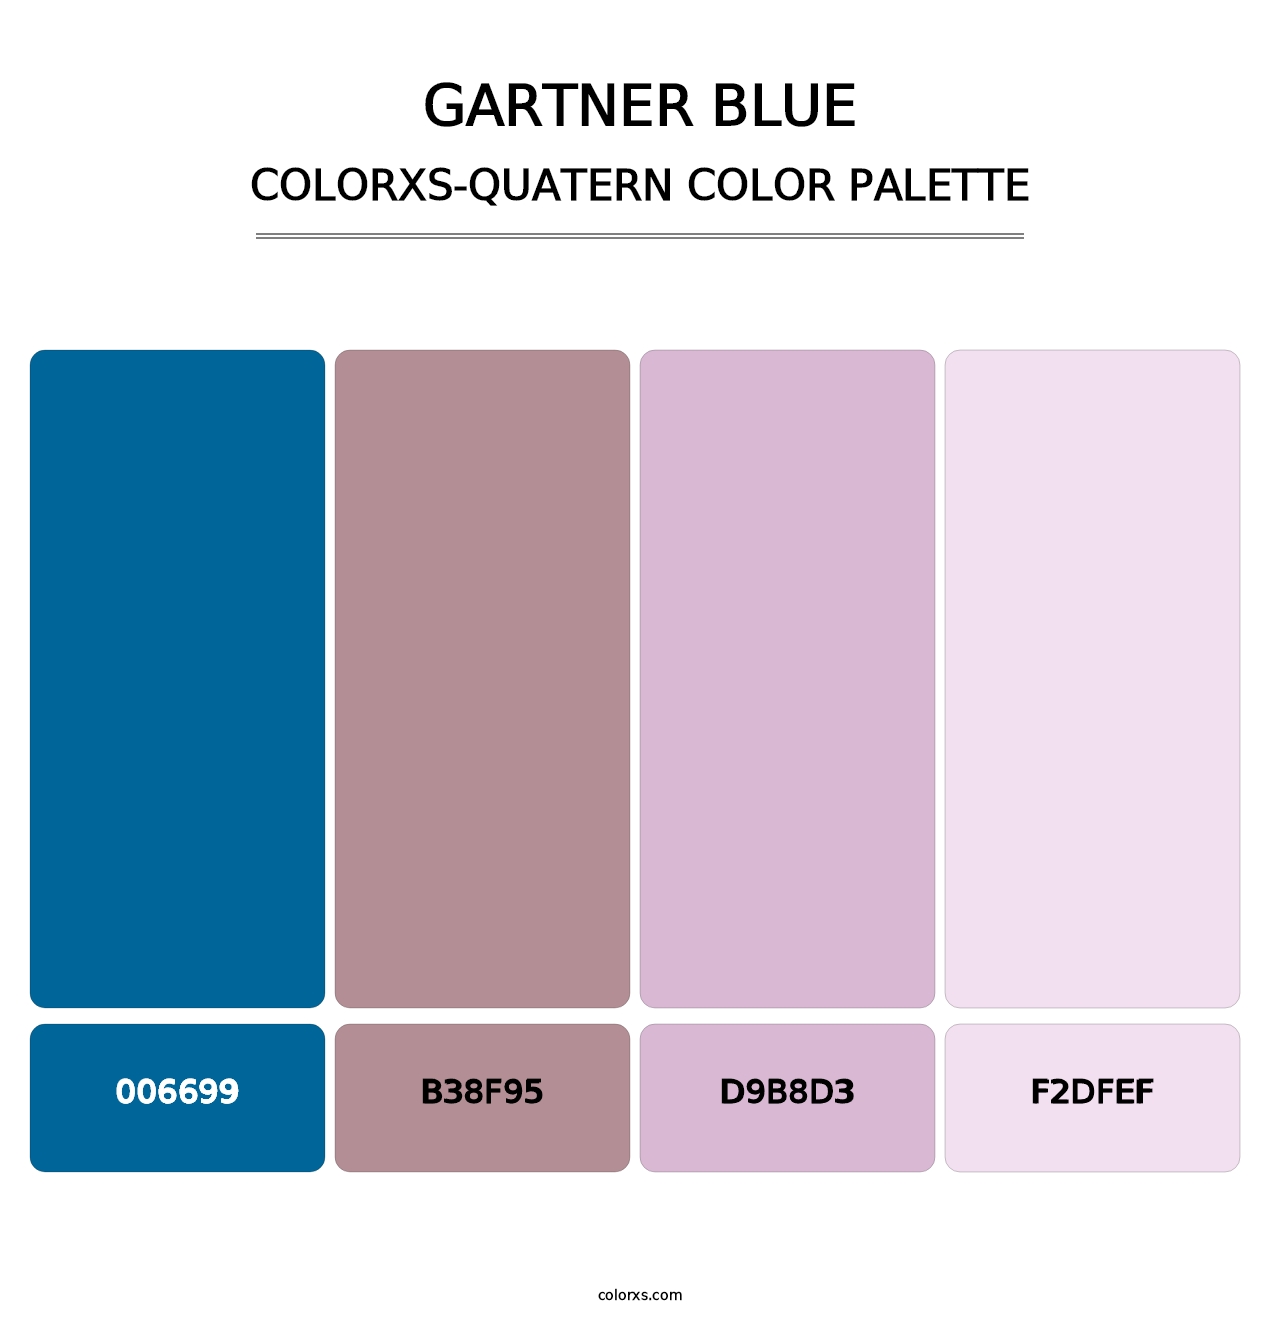 Gartner Blue - Colorxs Quatern Palette